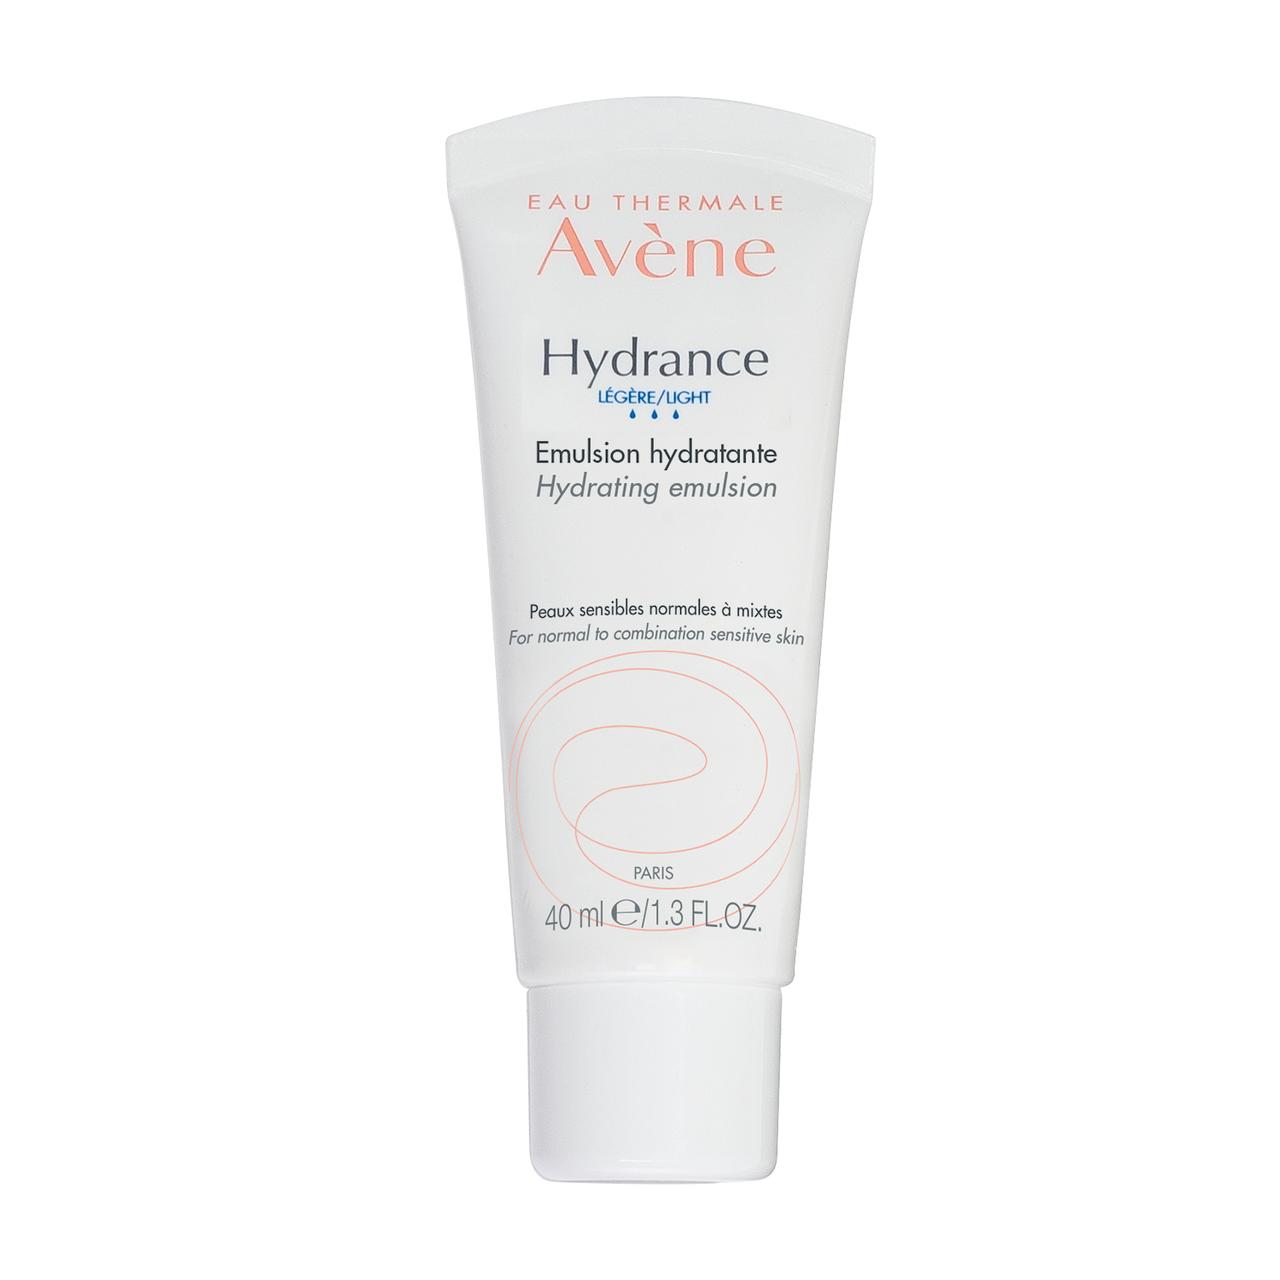 Avene Hydrance Optimale LIGHT Hydrating Cream, 1.3 Fl Oz - image 1 of 4